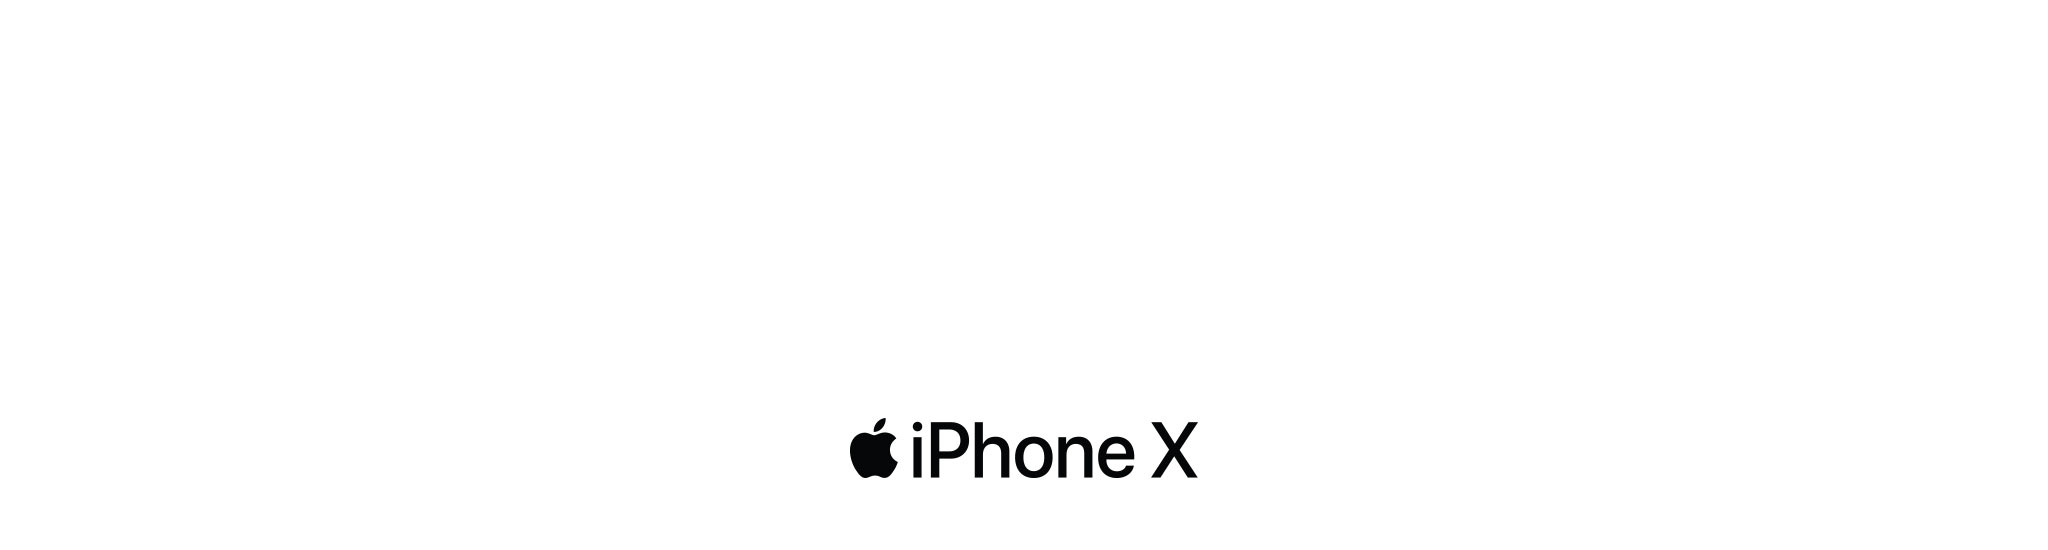 iPhone X Logo - iPhone X